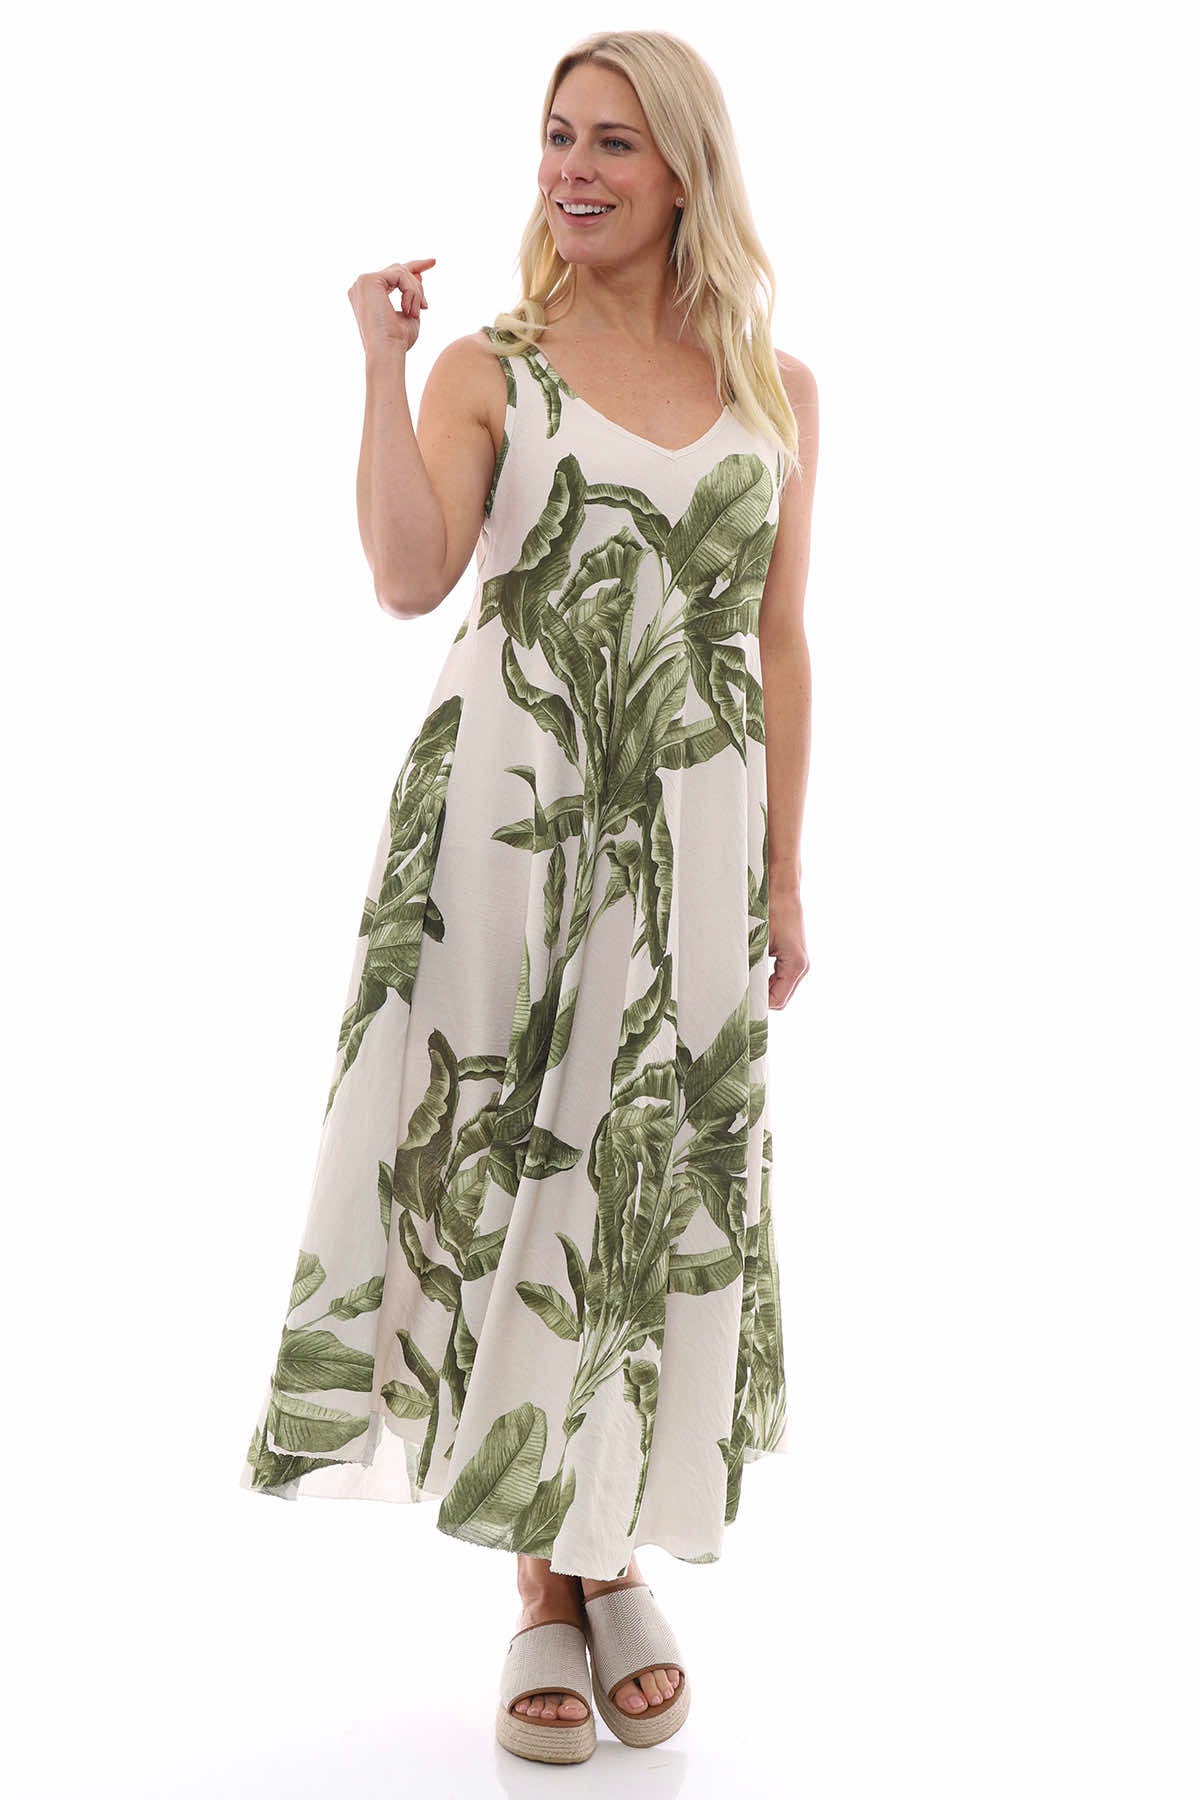 Fenyx Botanical Dress Khaki